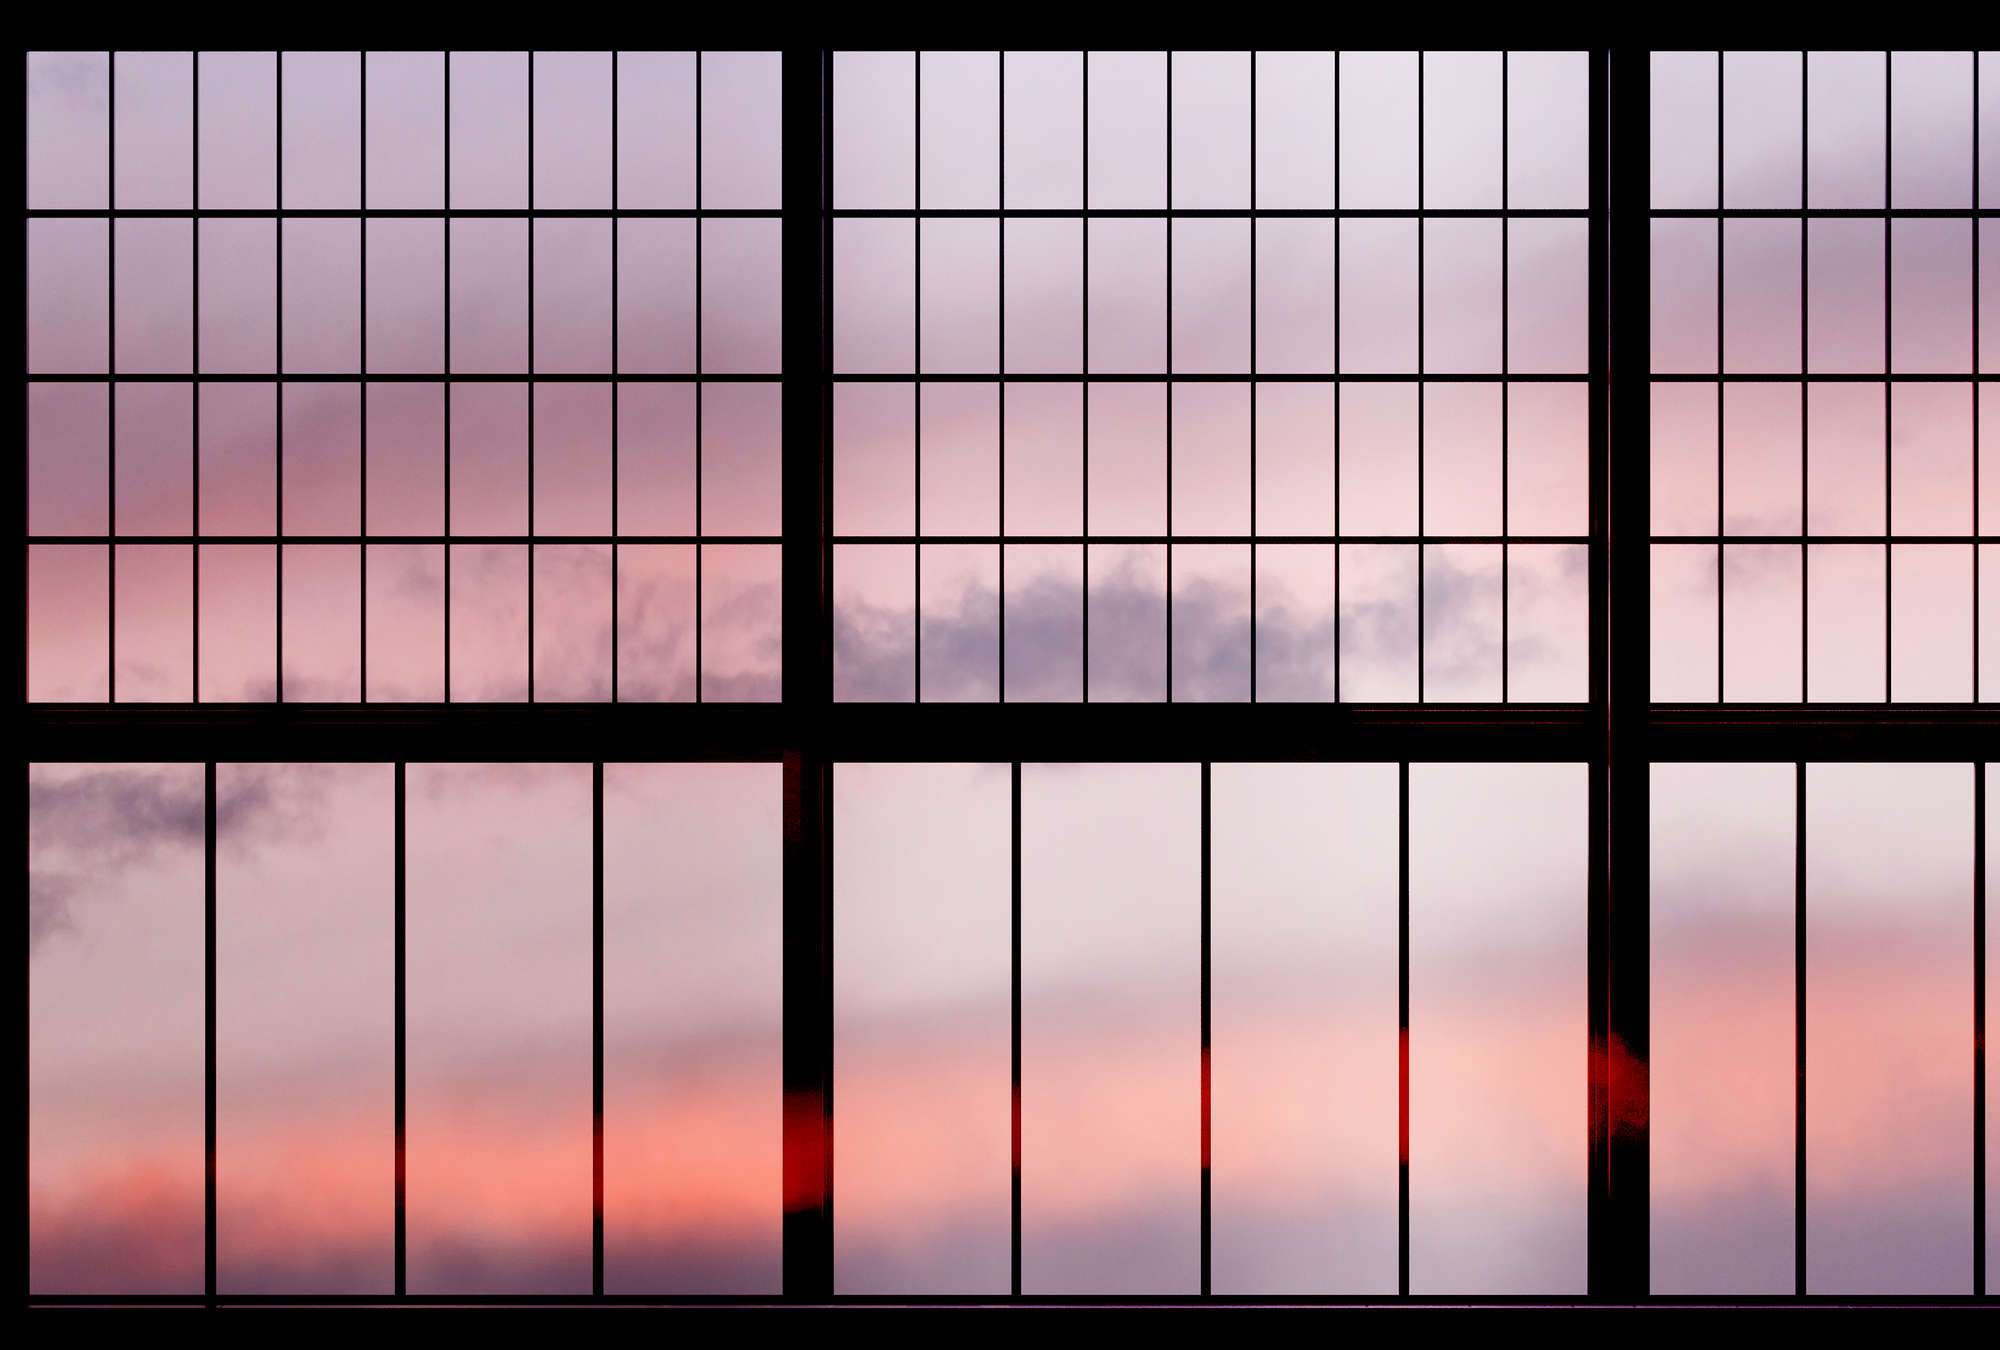             Sky 1 - Fototapete Fenster Ausblick Sonnenaufgang – Rosa, Schwarz | Mattes Glattvlies
        